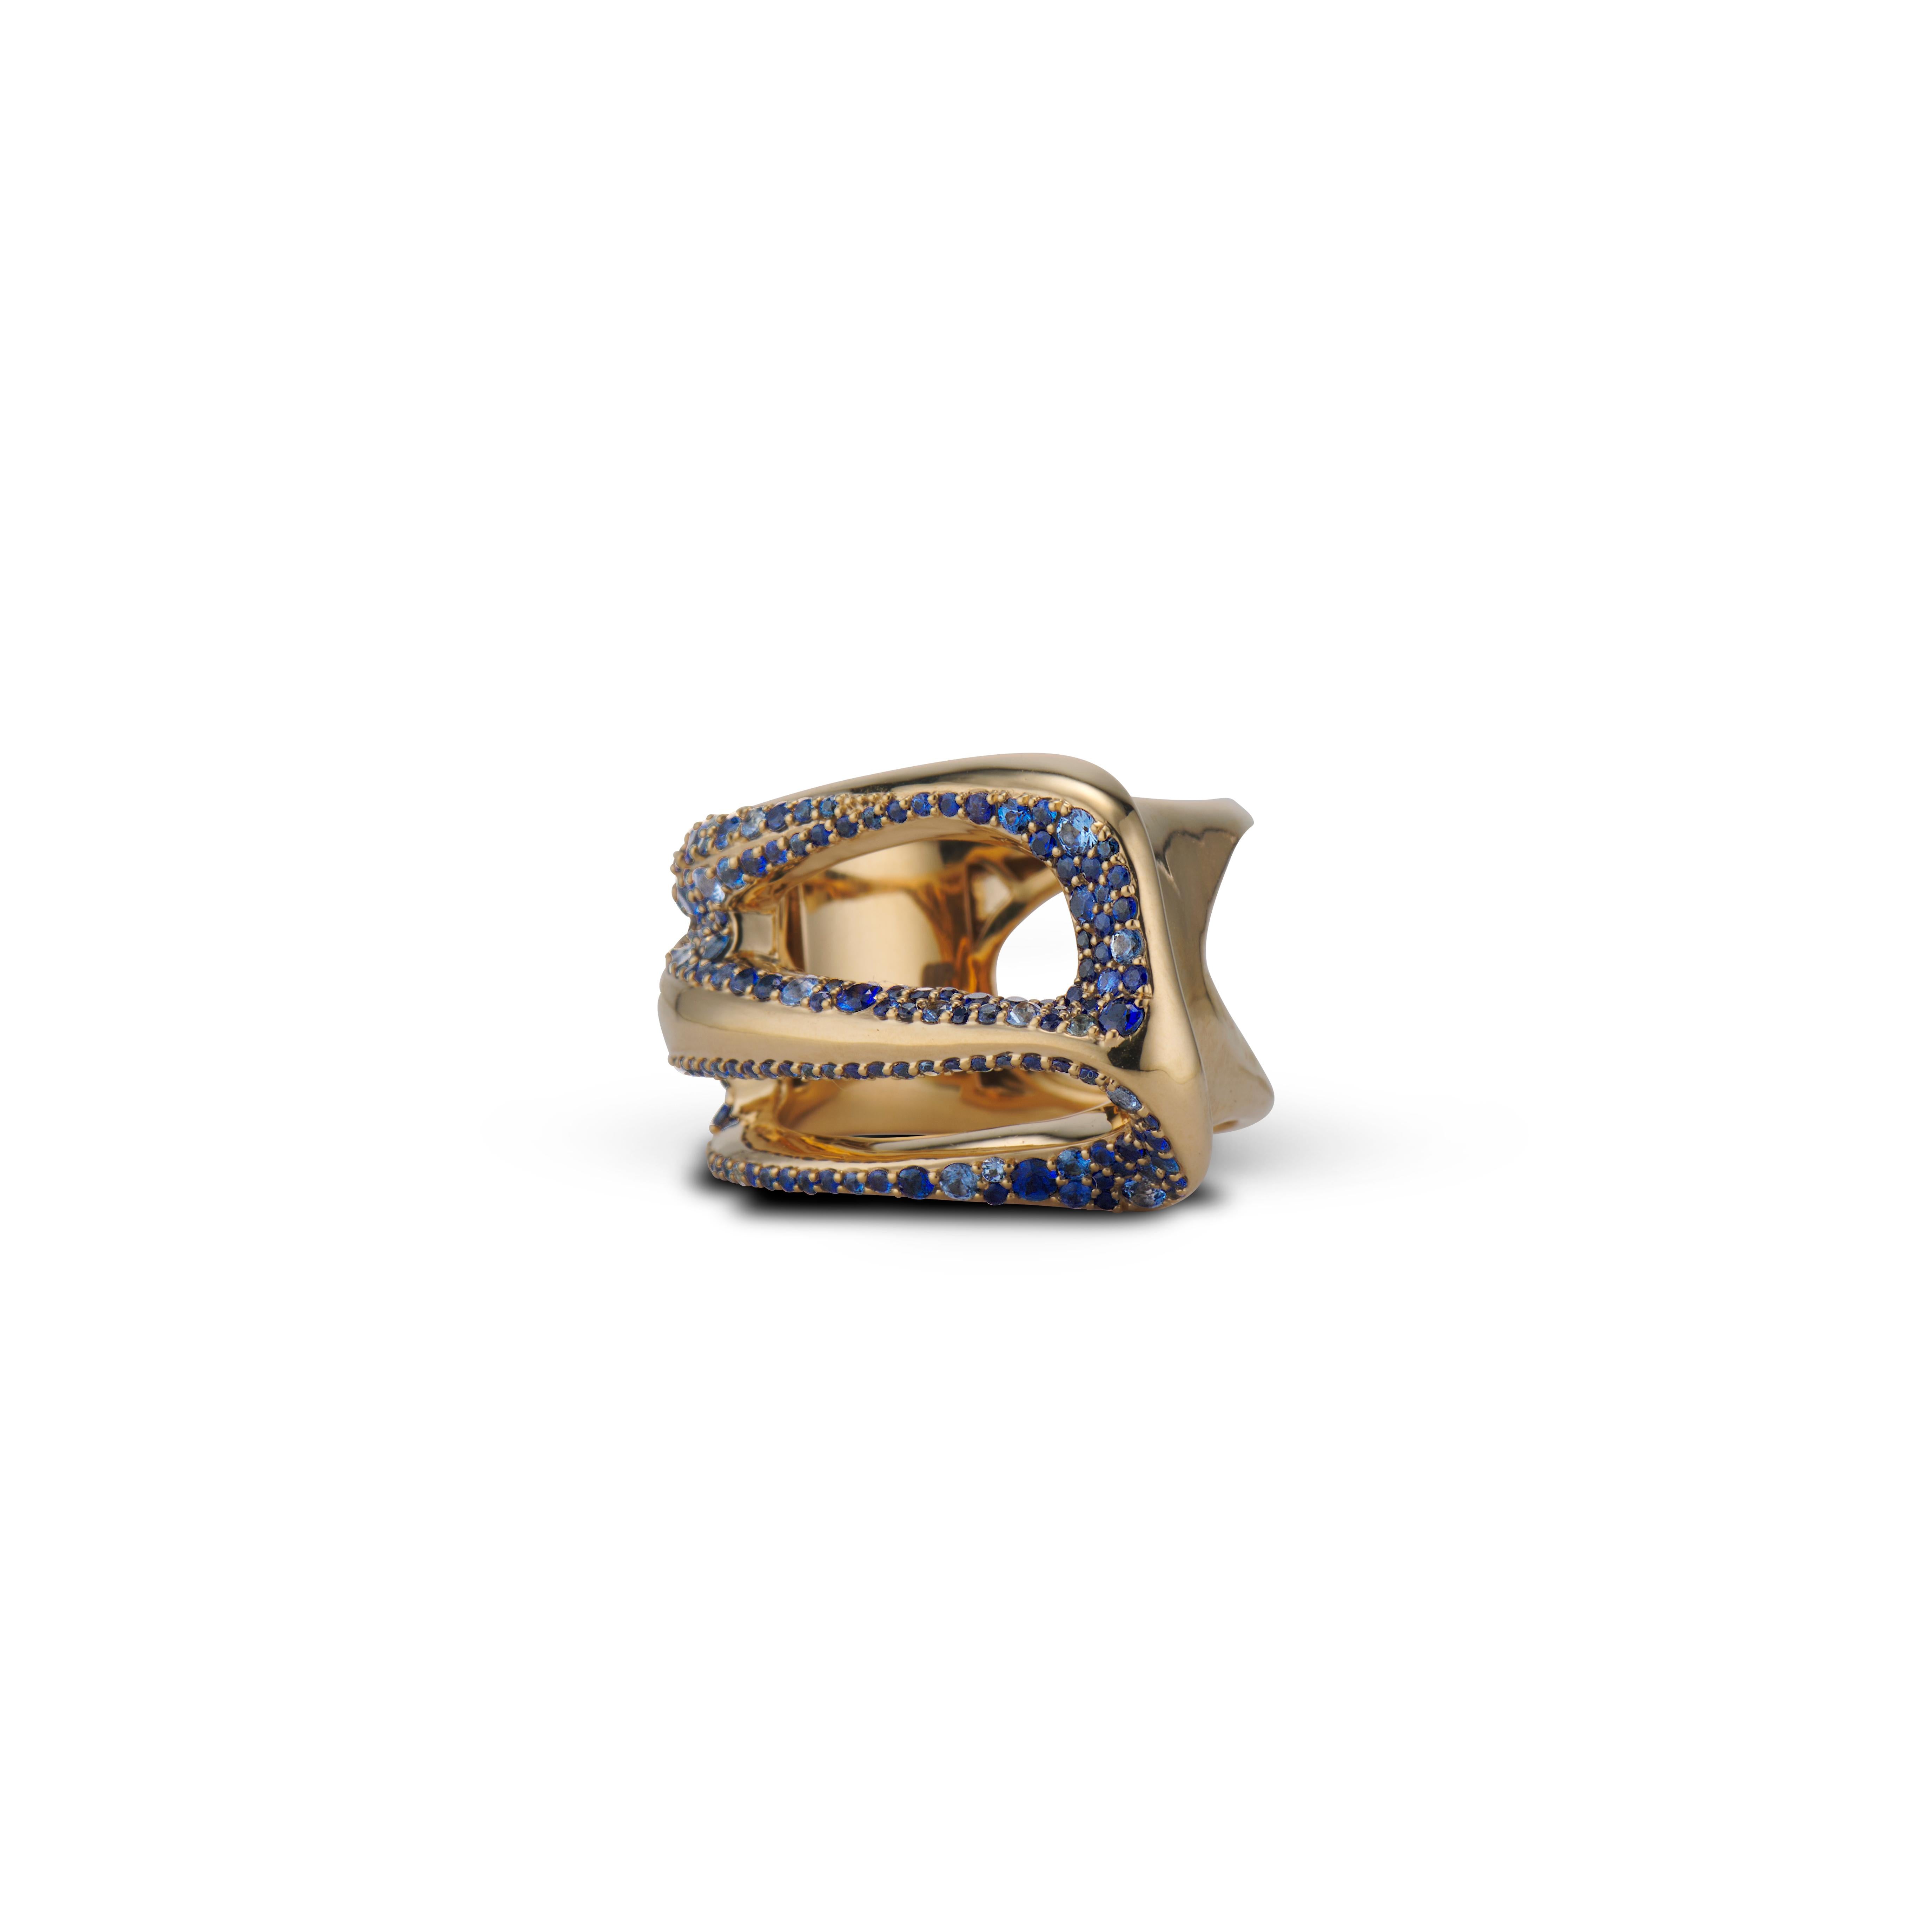 JV Insardi 18 Karat Gold Sculptural Ring with Blue Sapphires 2